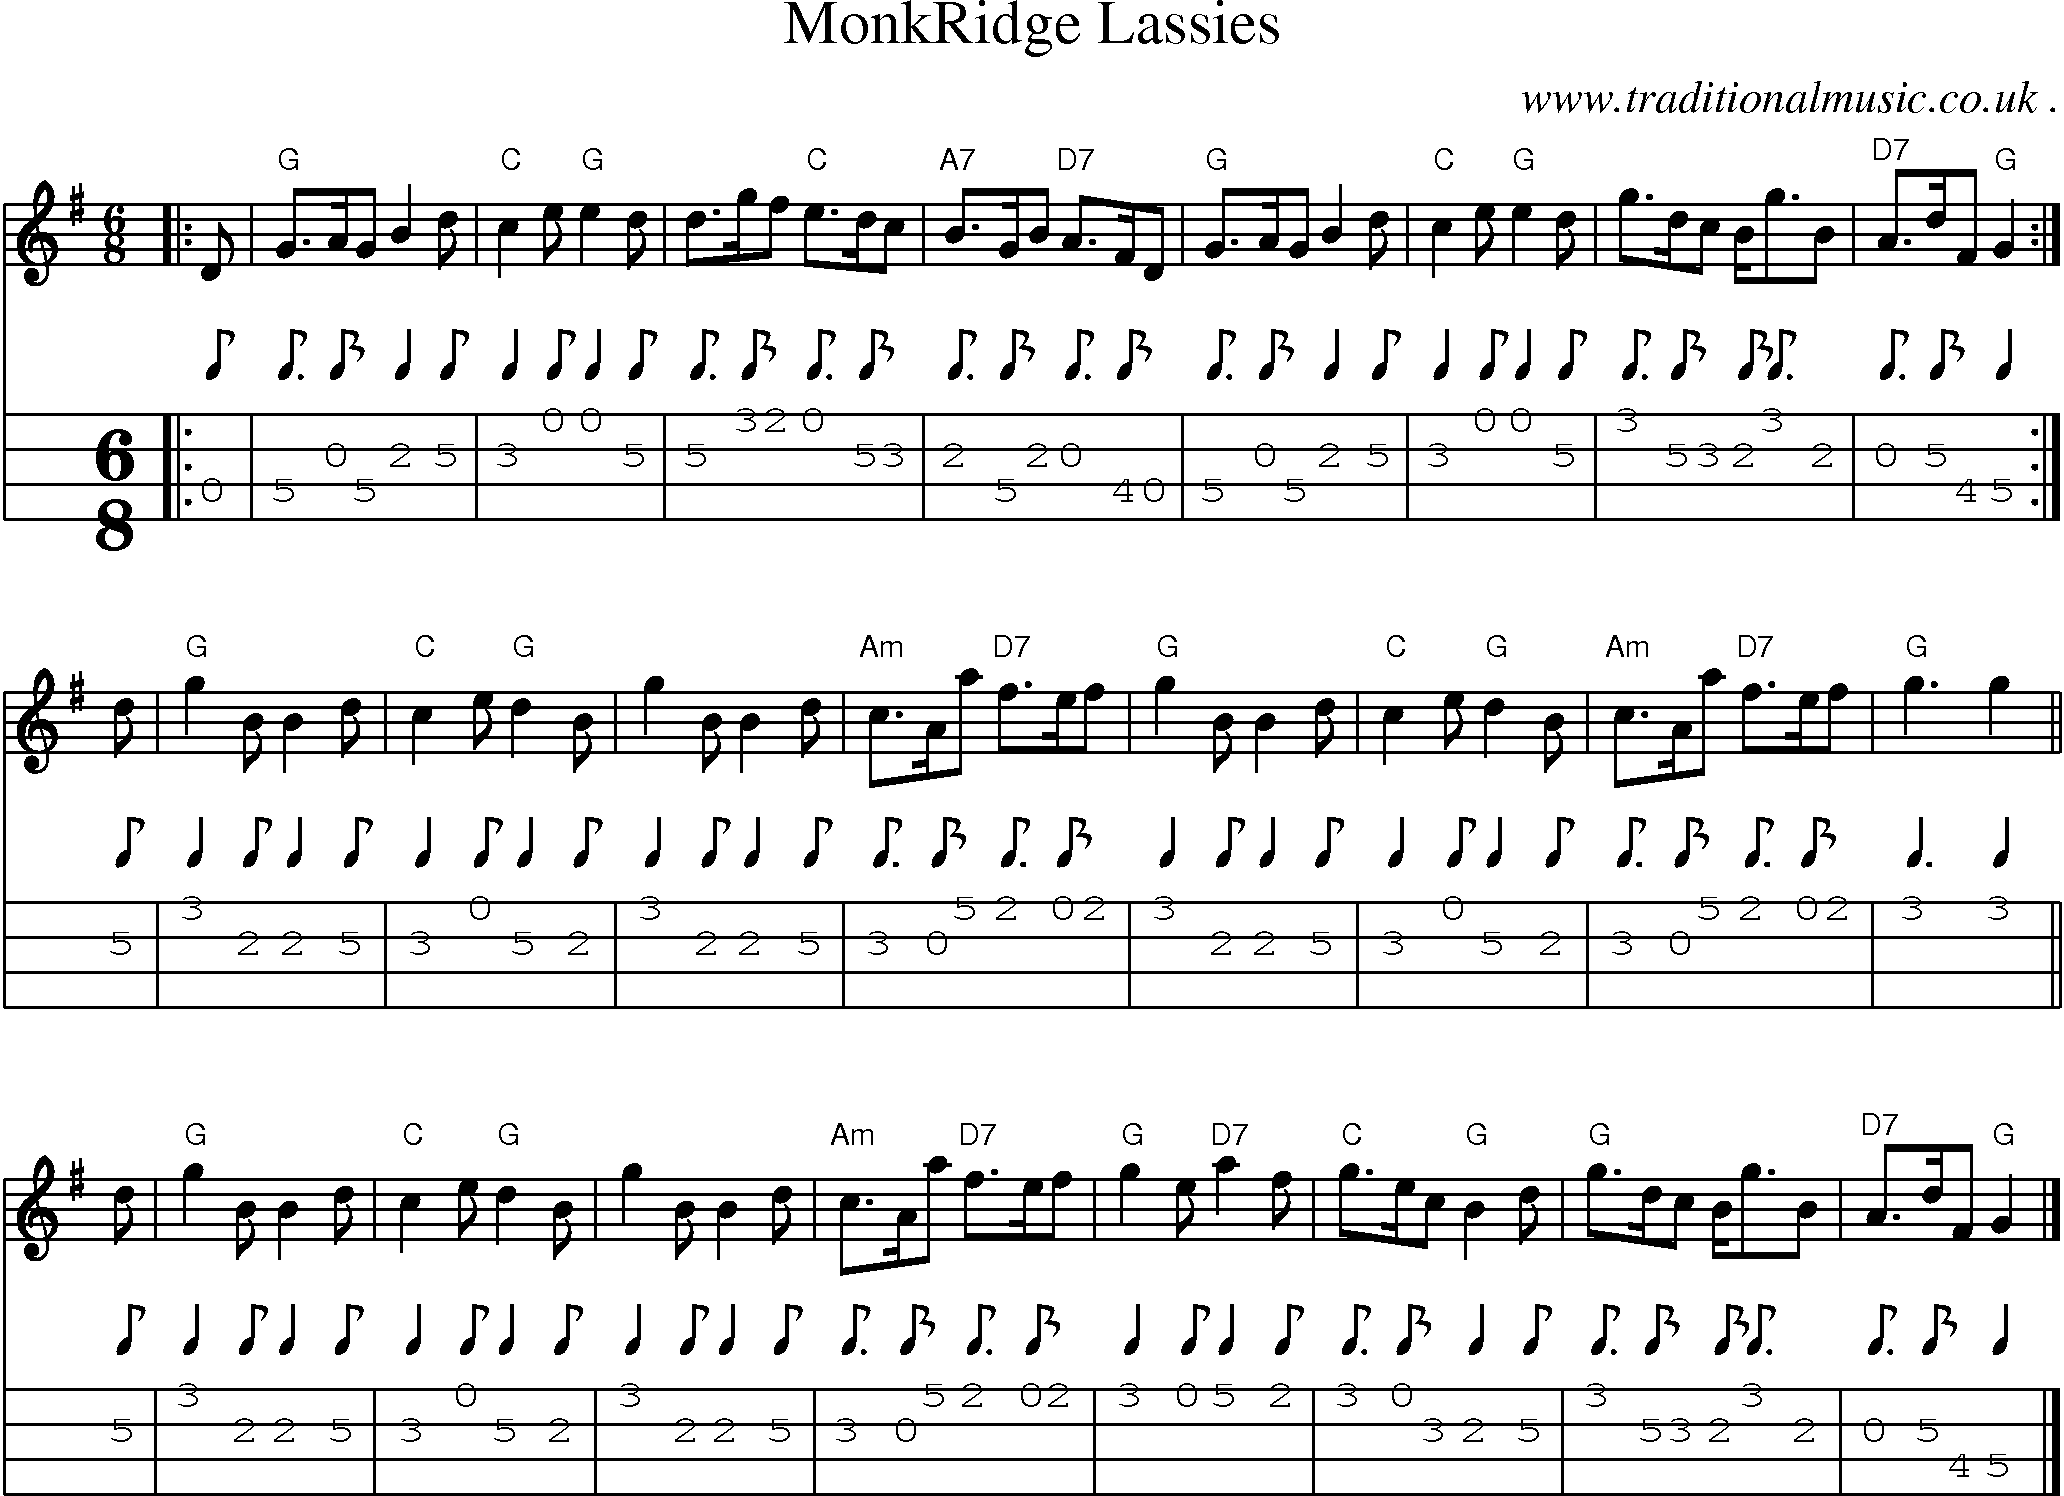 Sheet-music  score, Chords and Mandolin Tabs for Monkridge Lassies